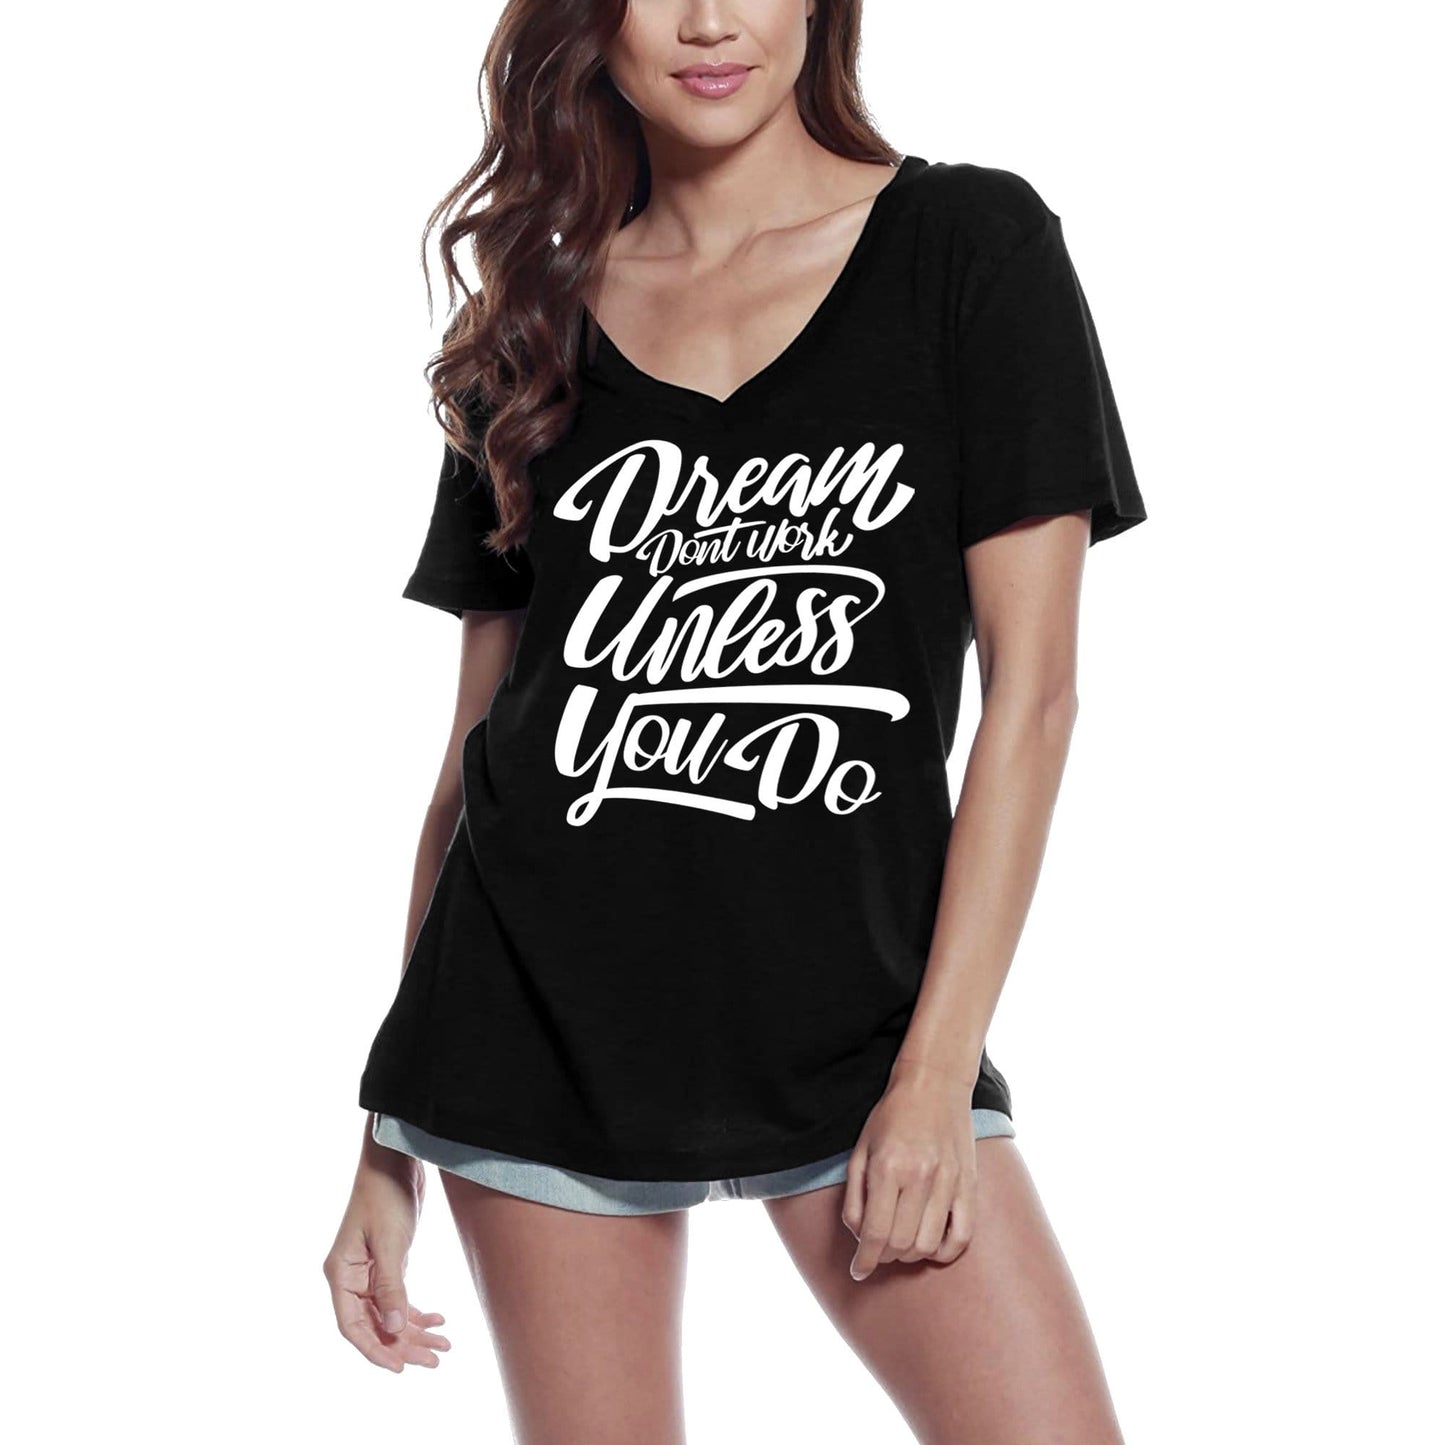 ULTRABASIC Women's T-Shirt Dreams Don't Work - Motivational Inspirational Slogan